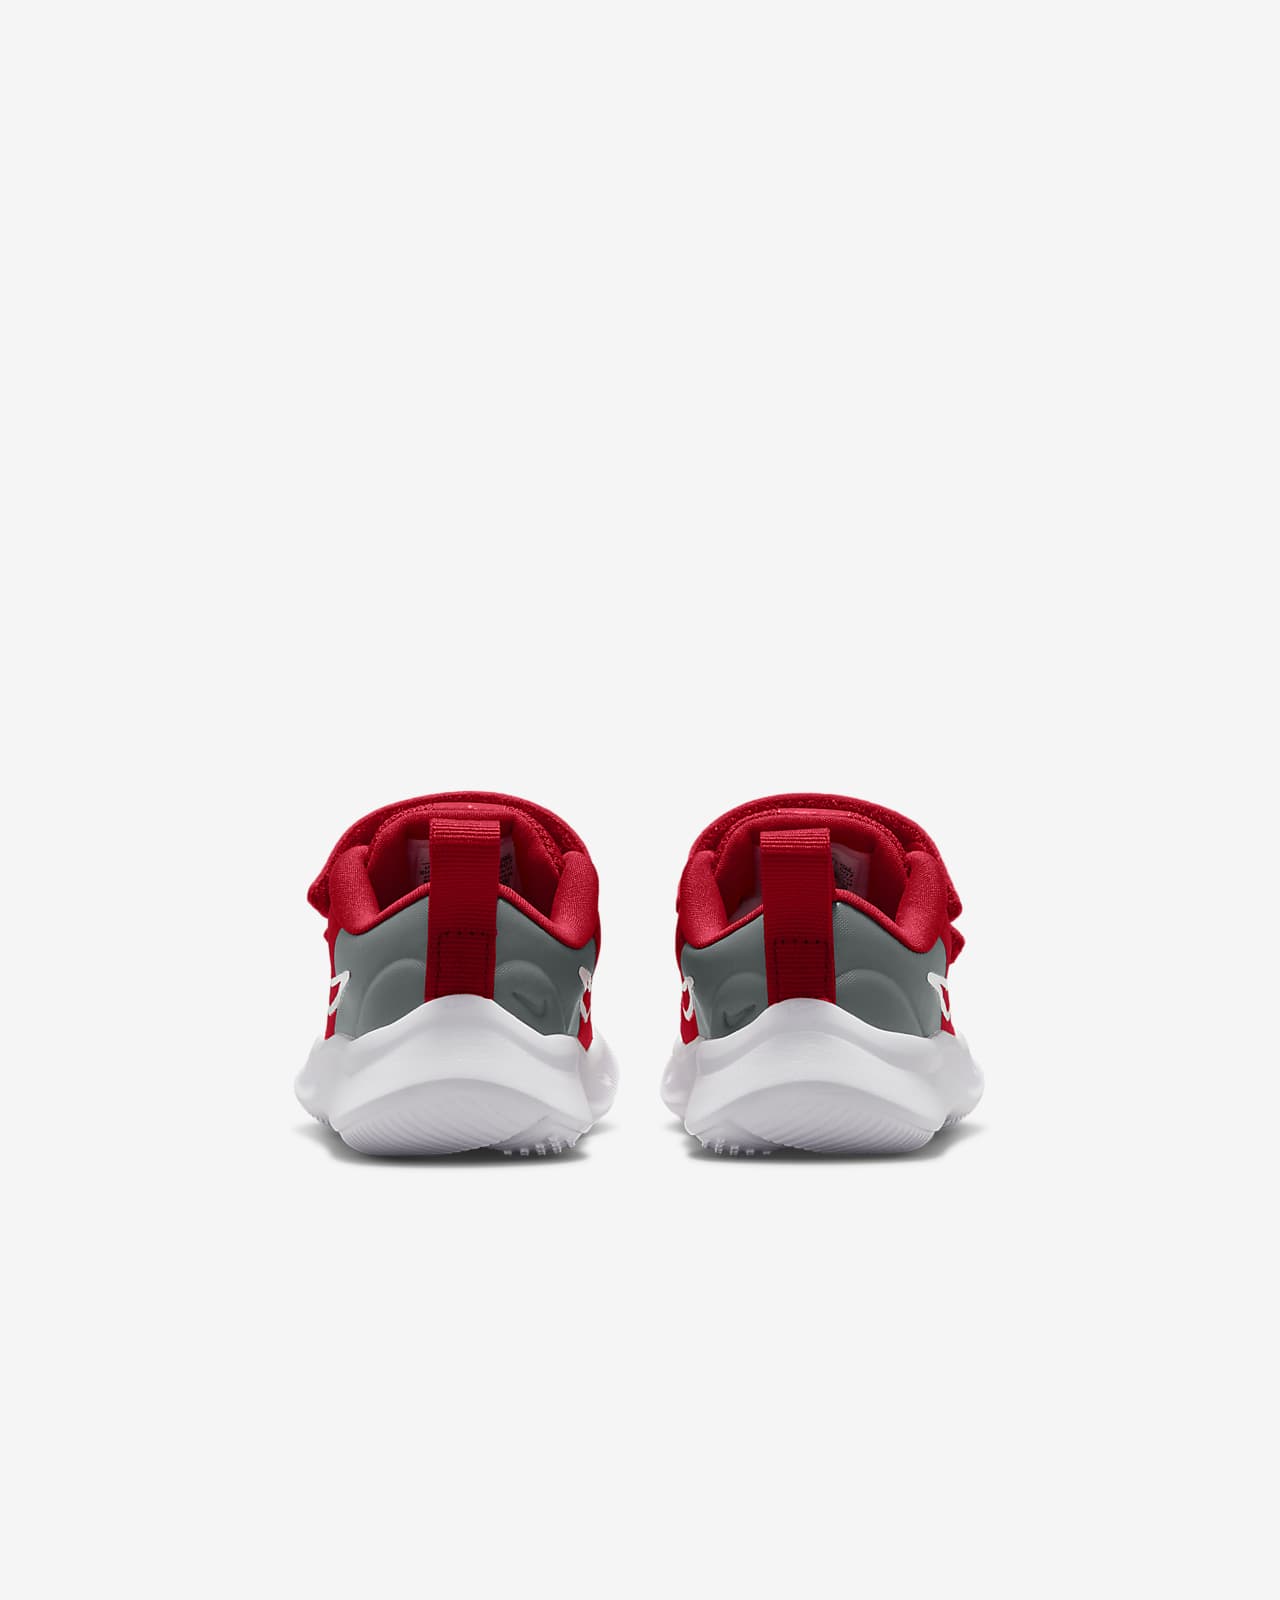 Nike Star 3 Baby/Toddler Shoes. Runner